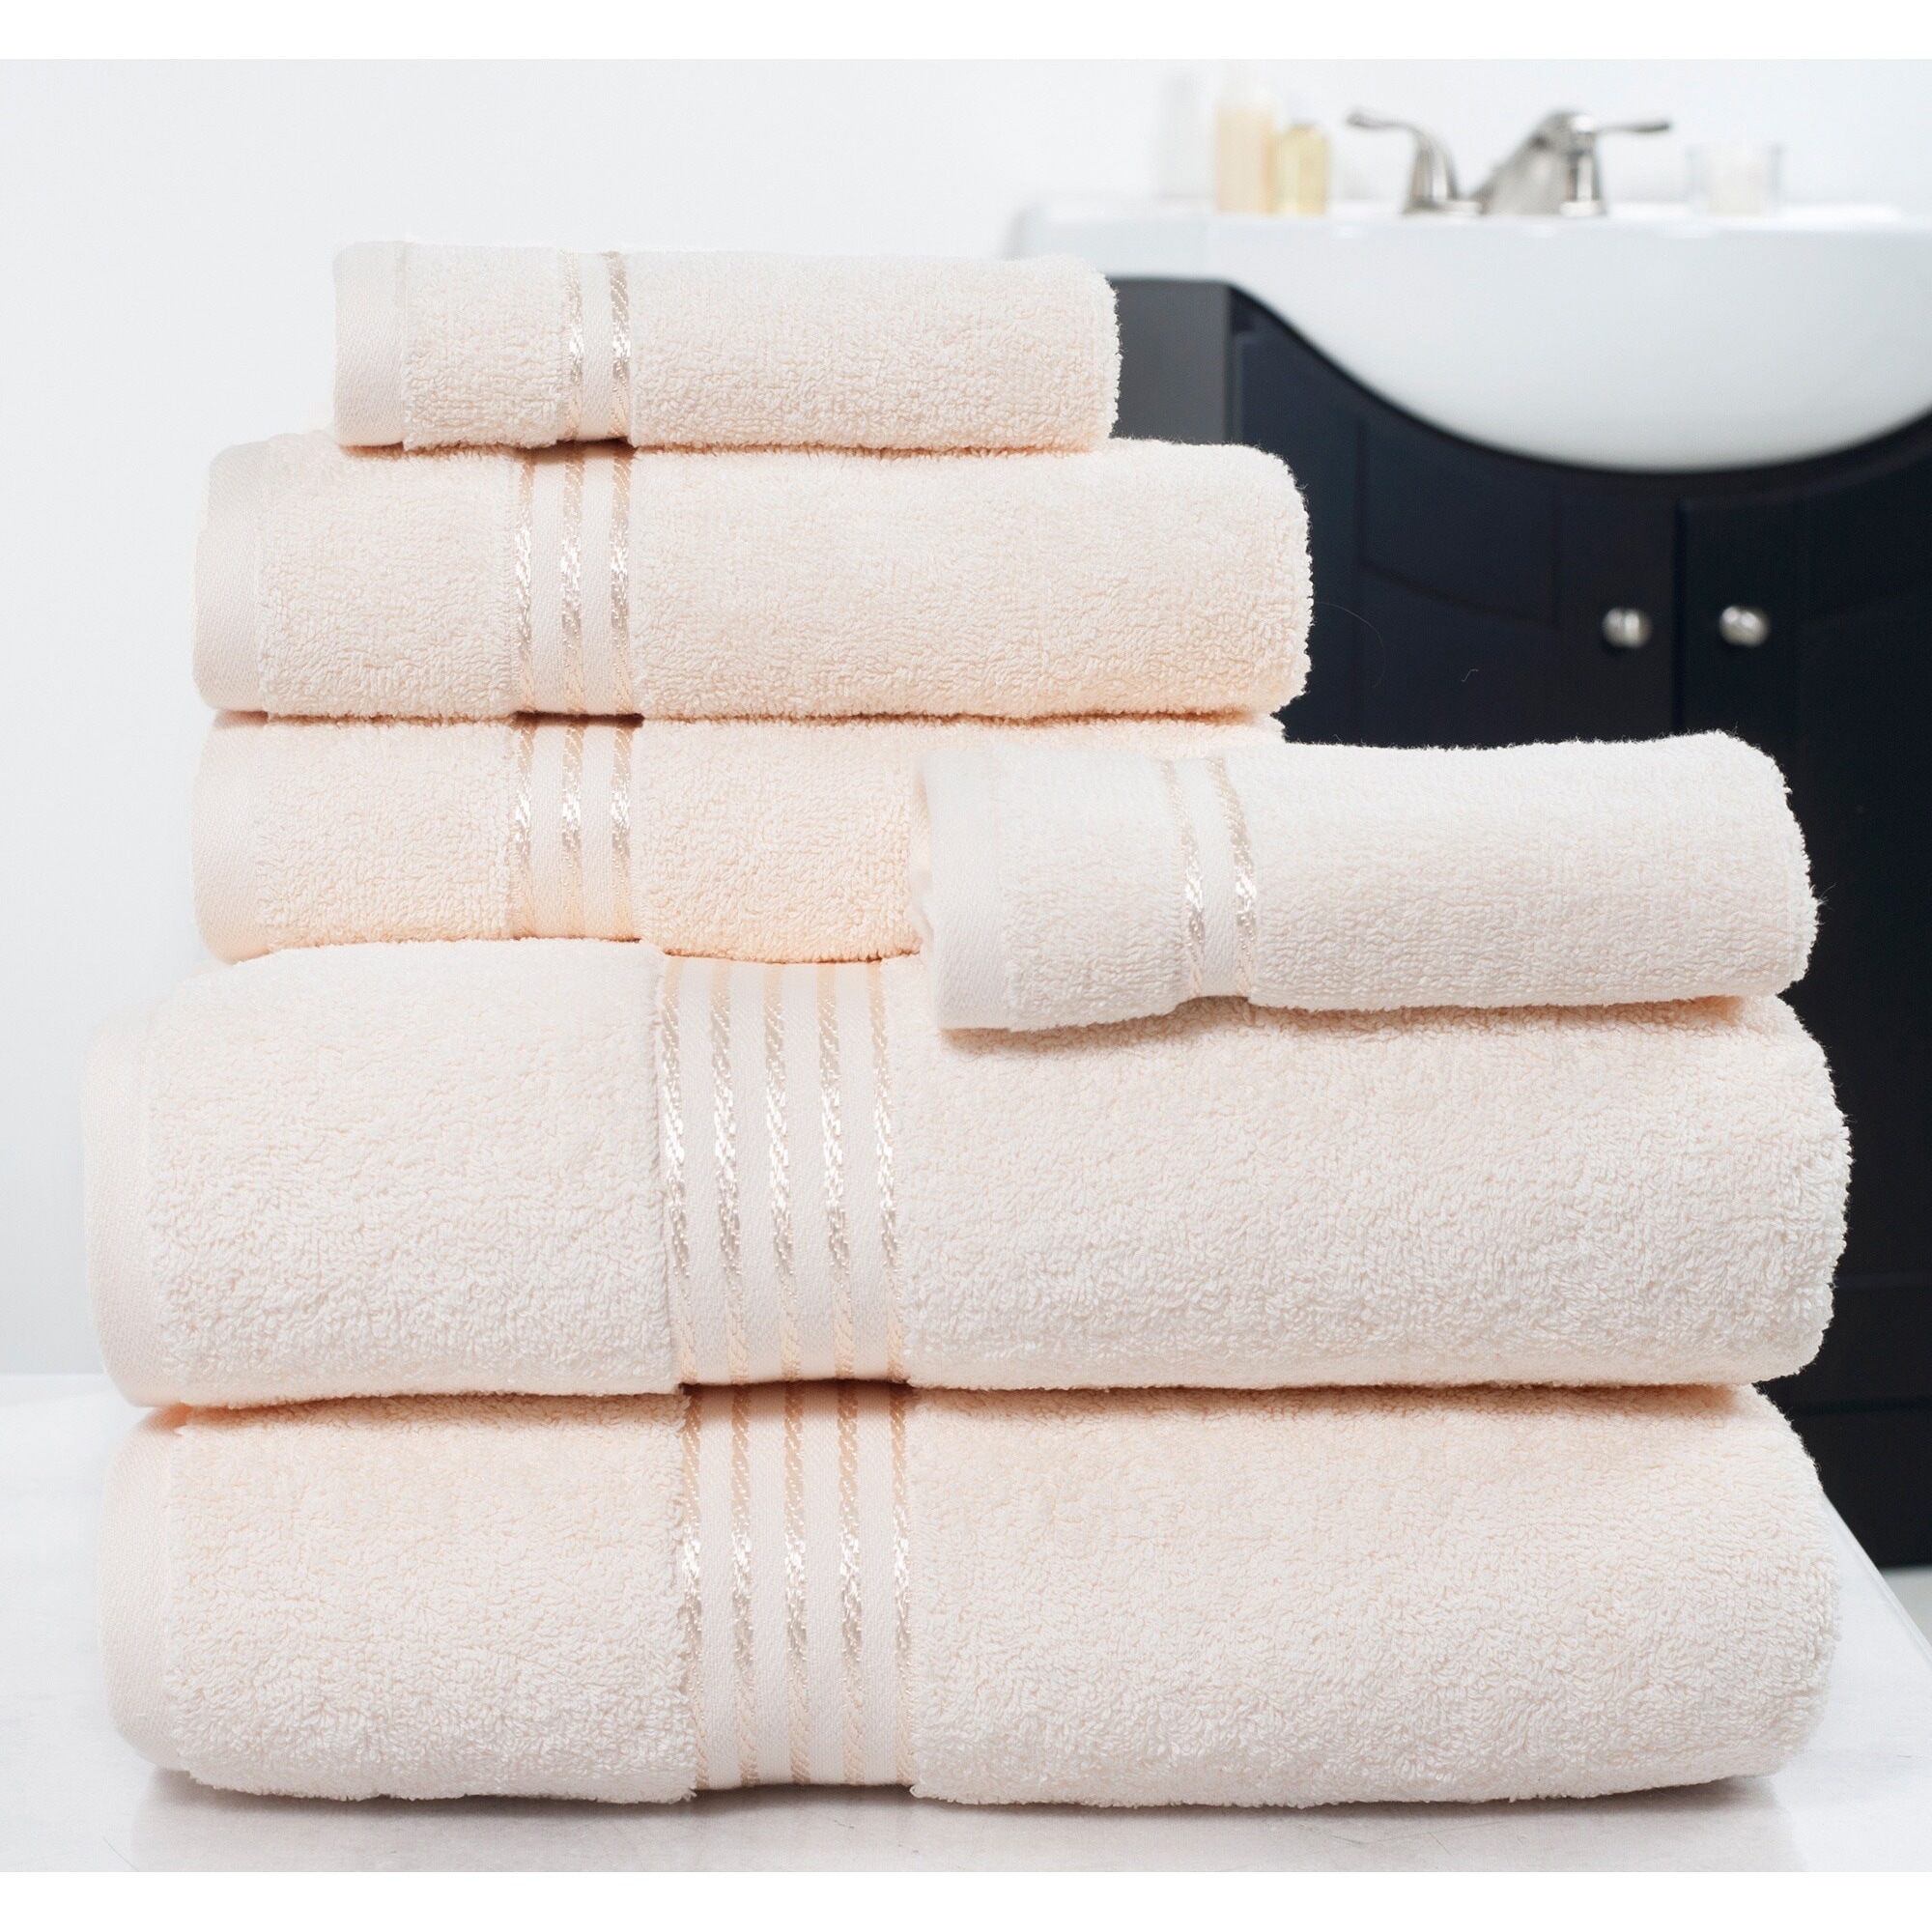 https://ak1.ostkcdn.com/images/products/is/images/direct/928e27e17e80cec64f3332151bcf3728a521a4b8/Windsor-Home-100-percent-Cotton-Hotel-6-piece-Towel-Set.jpg